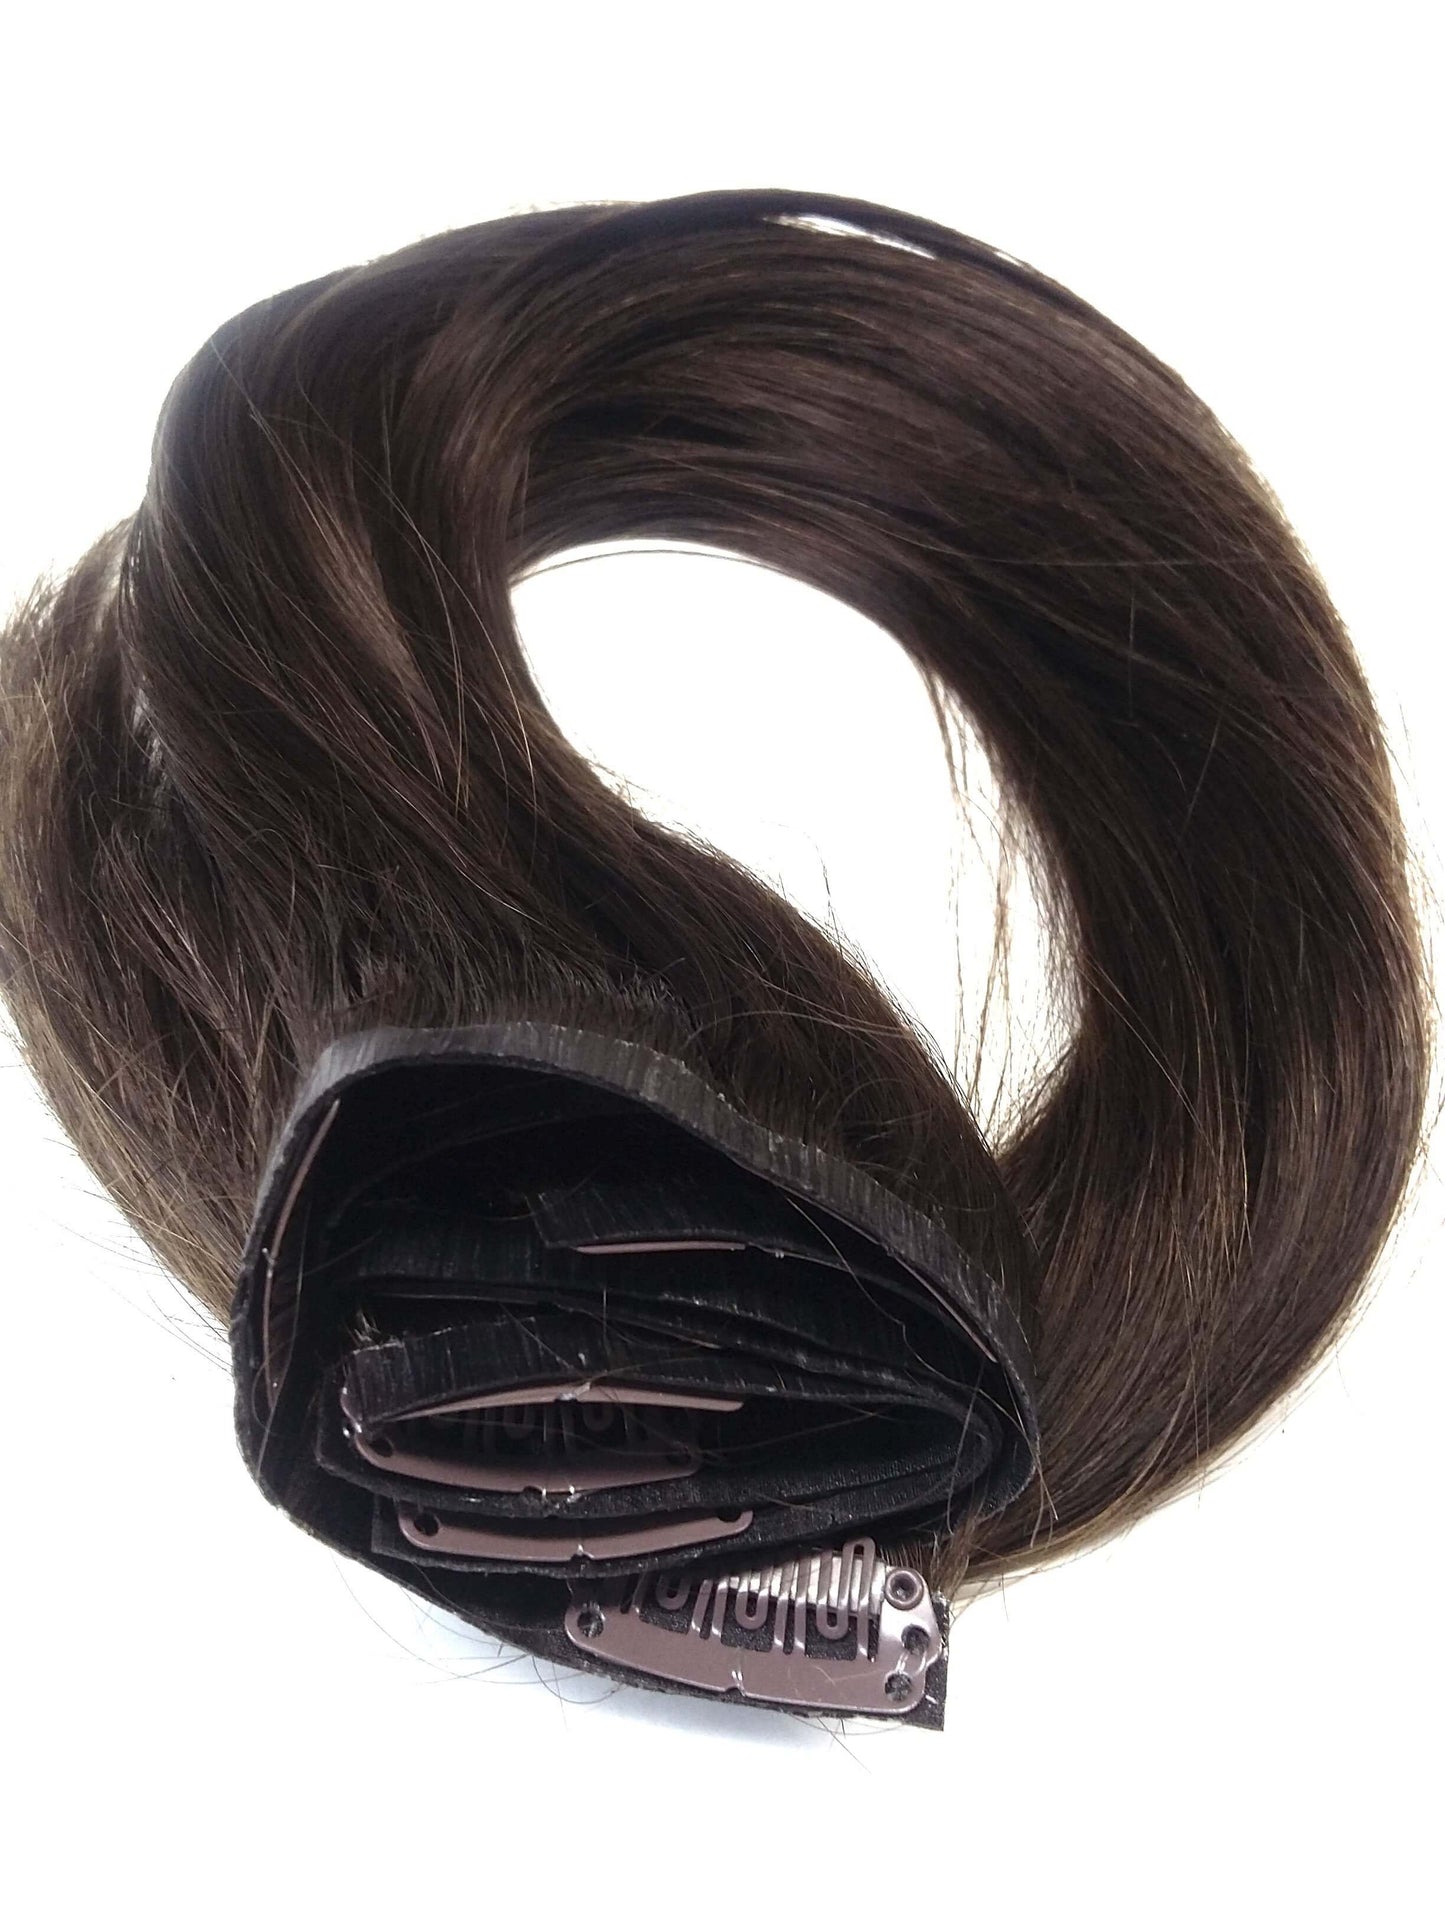 Brazilian Virgin Remy Human Hair - PU Clip In Extensions, 20'', Rak, Färg 2 ,100 g - Snabb leverans